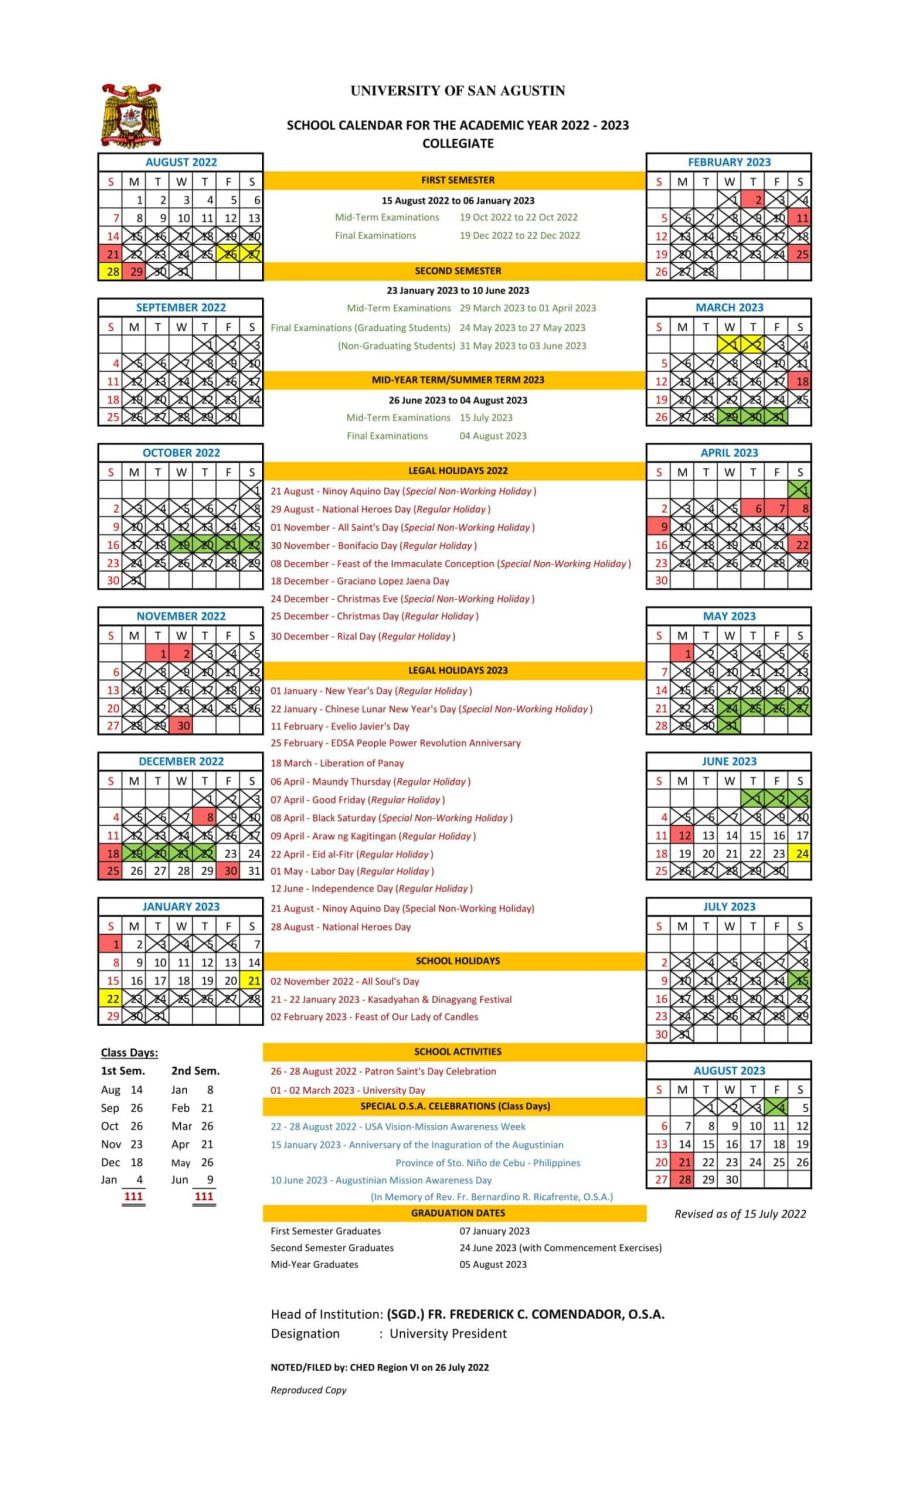 Collegiate School Calendar AY 20222023 UNIVERSITY OF SAN AGUSTIN